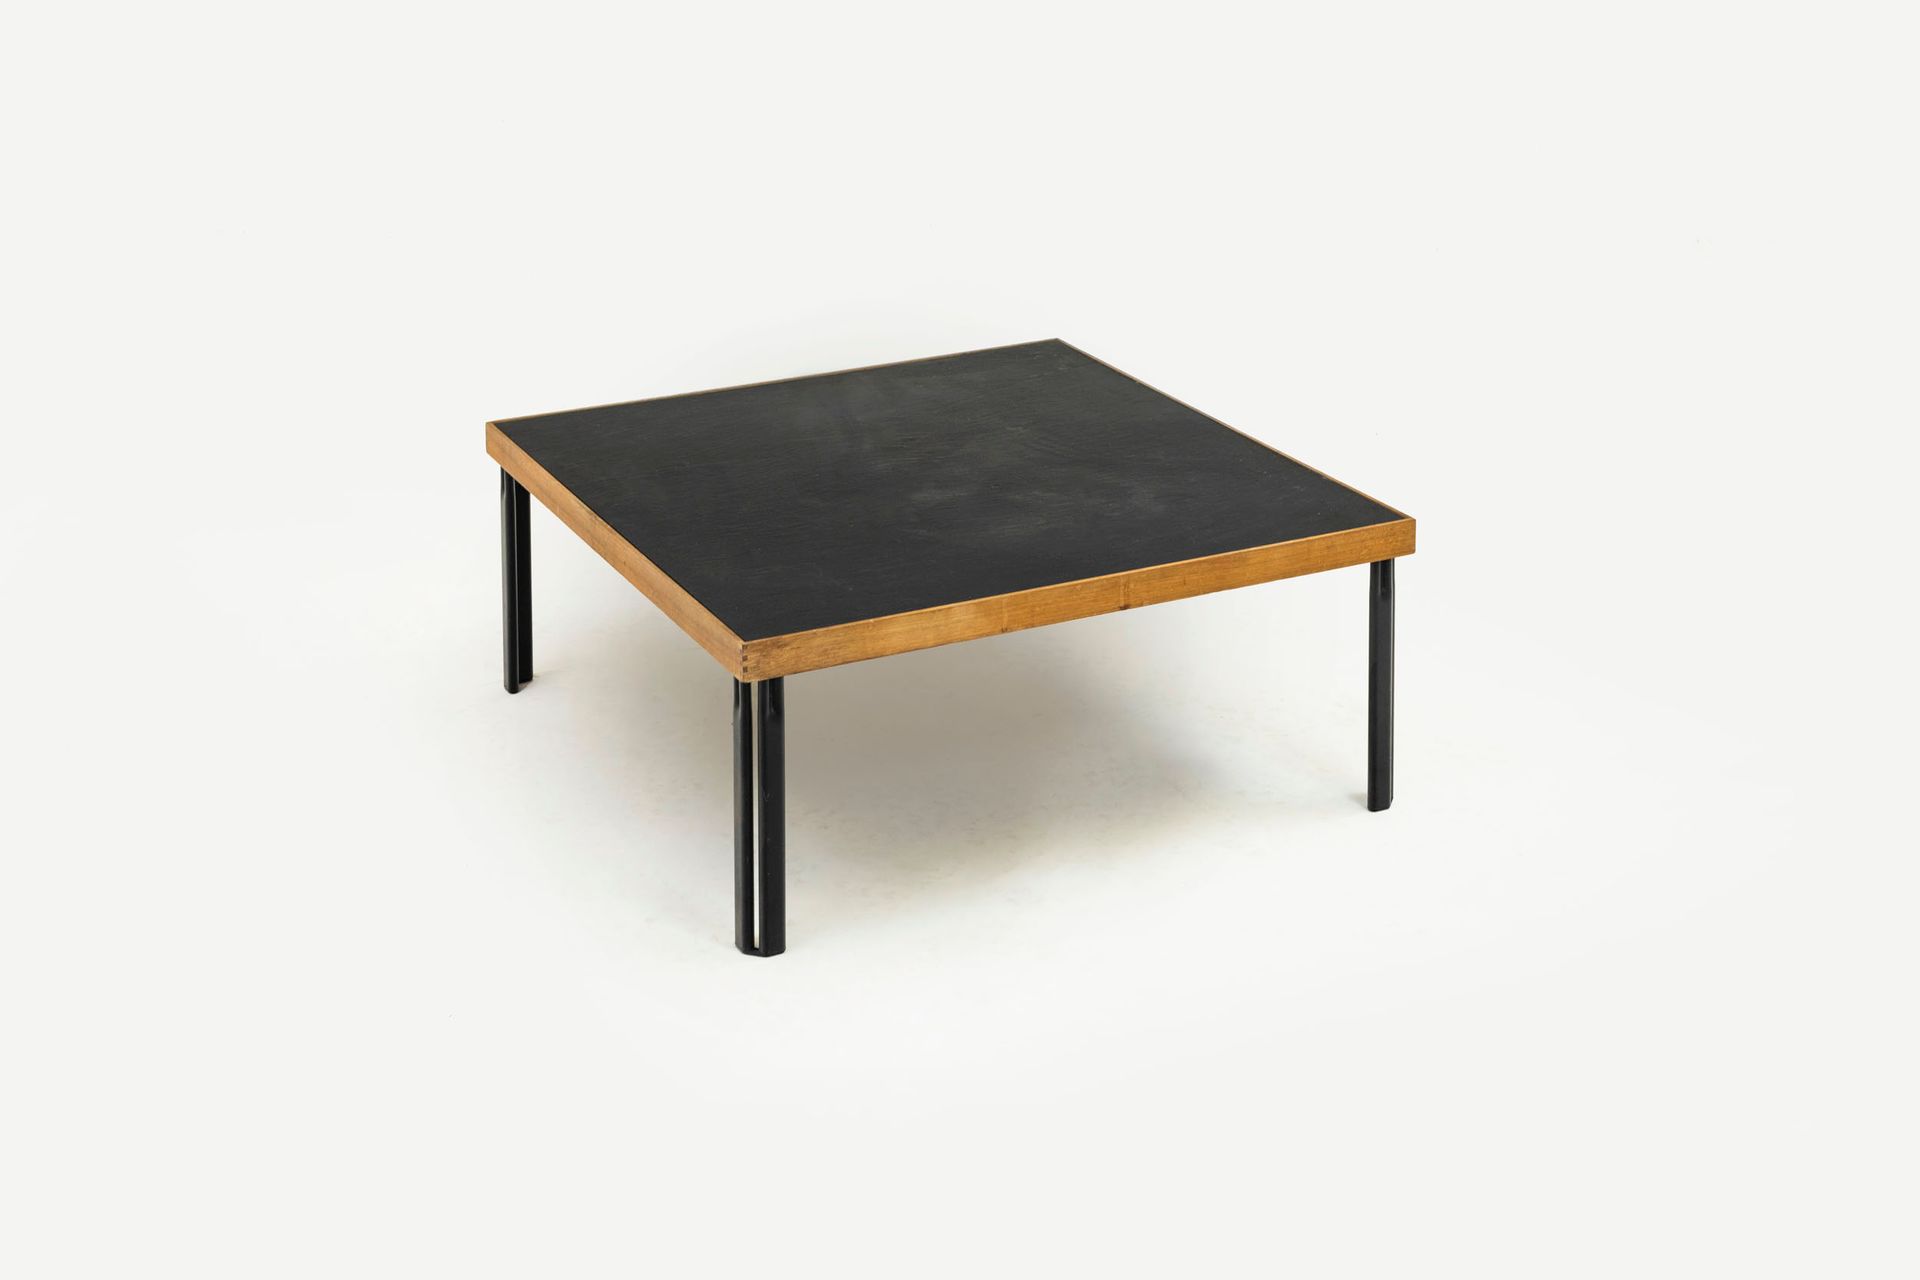 PIERO DE MARTINI 罕见的矮桌。搪瓷金属，石板，实木。制造商的标签。卡西纳生产，约1980年。 
35x85x85厘米
P.德-马蒂尼的罕见矮桌 &hellip;